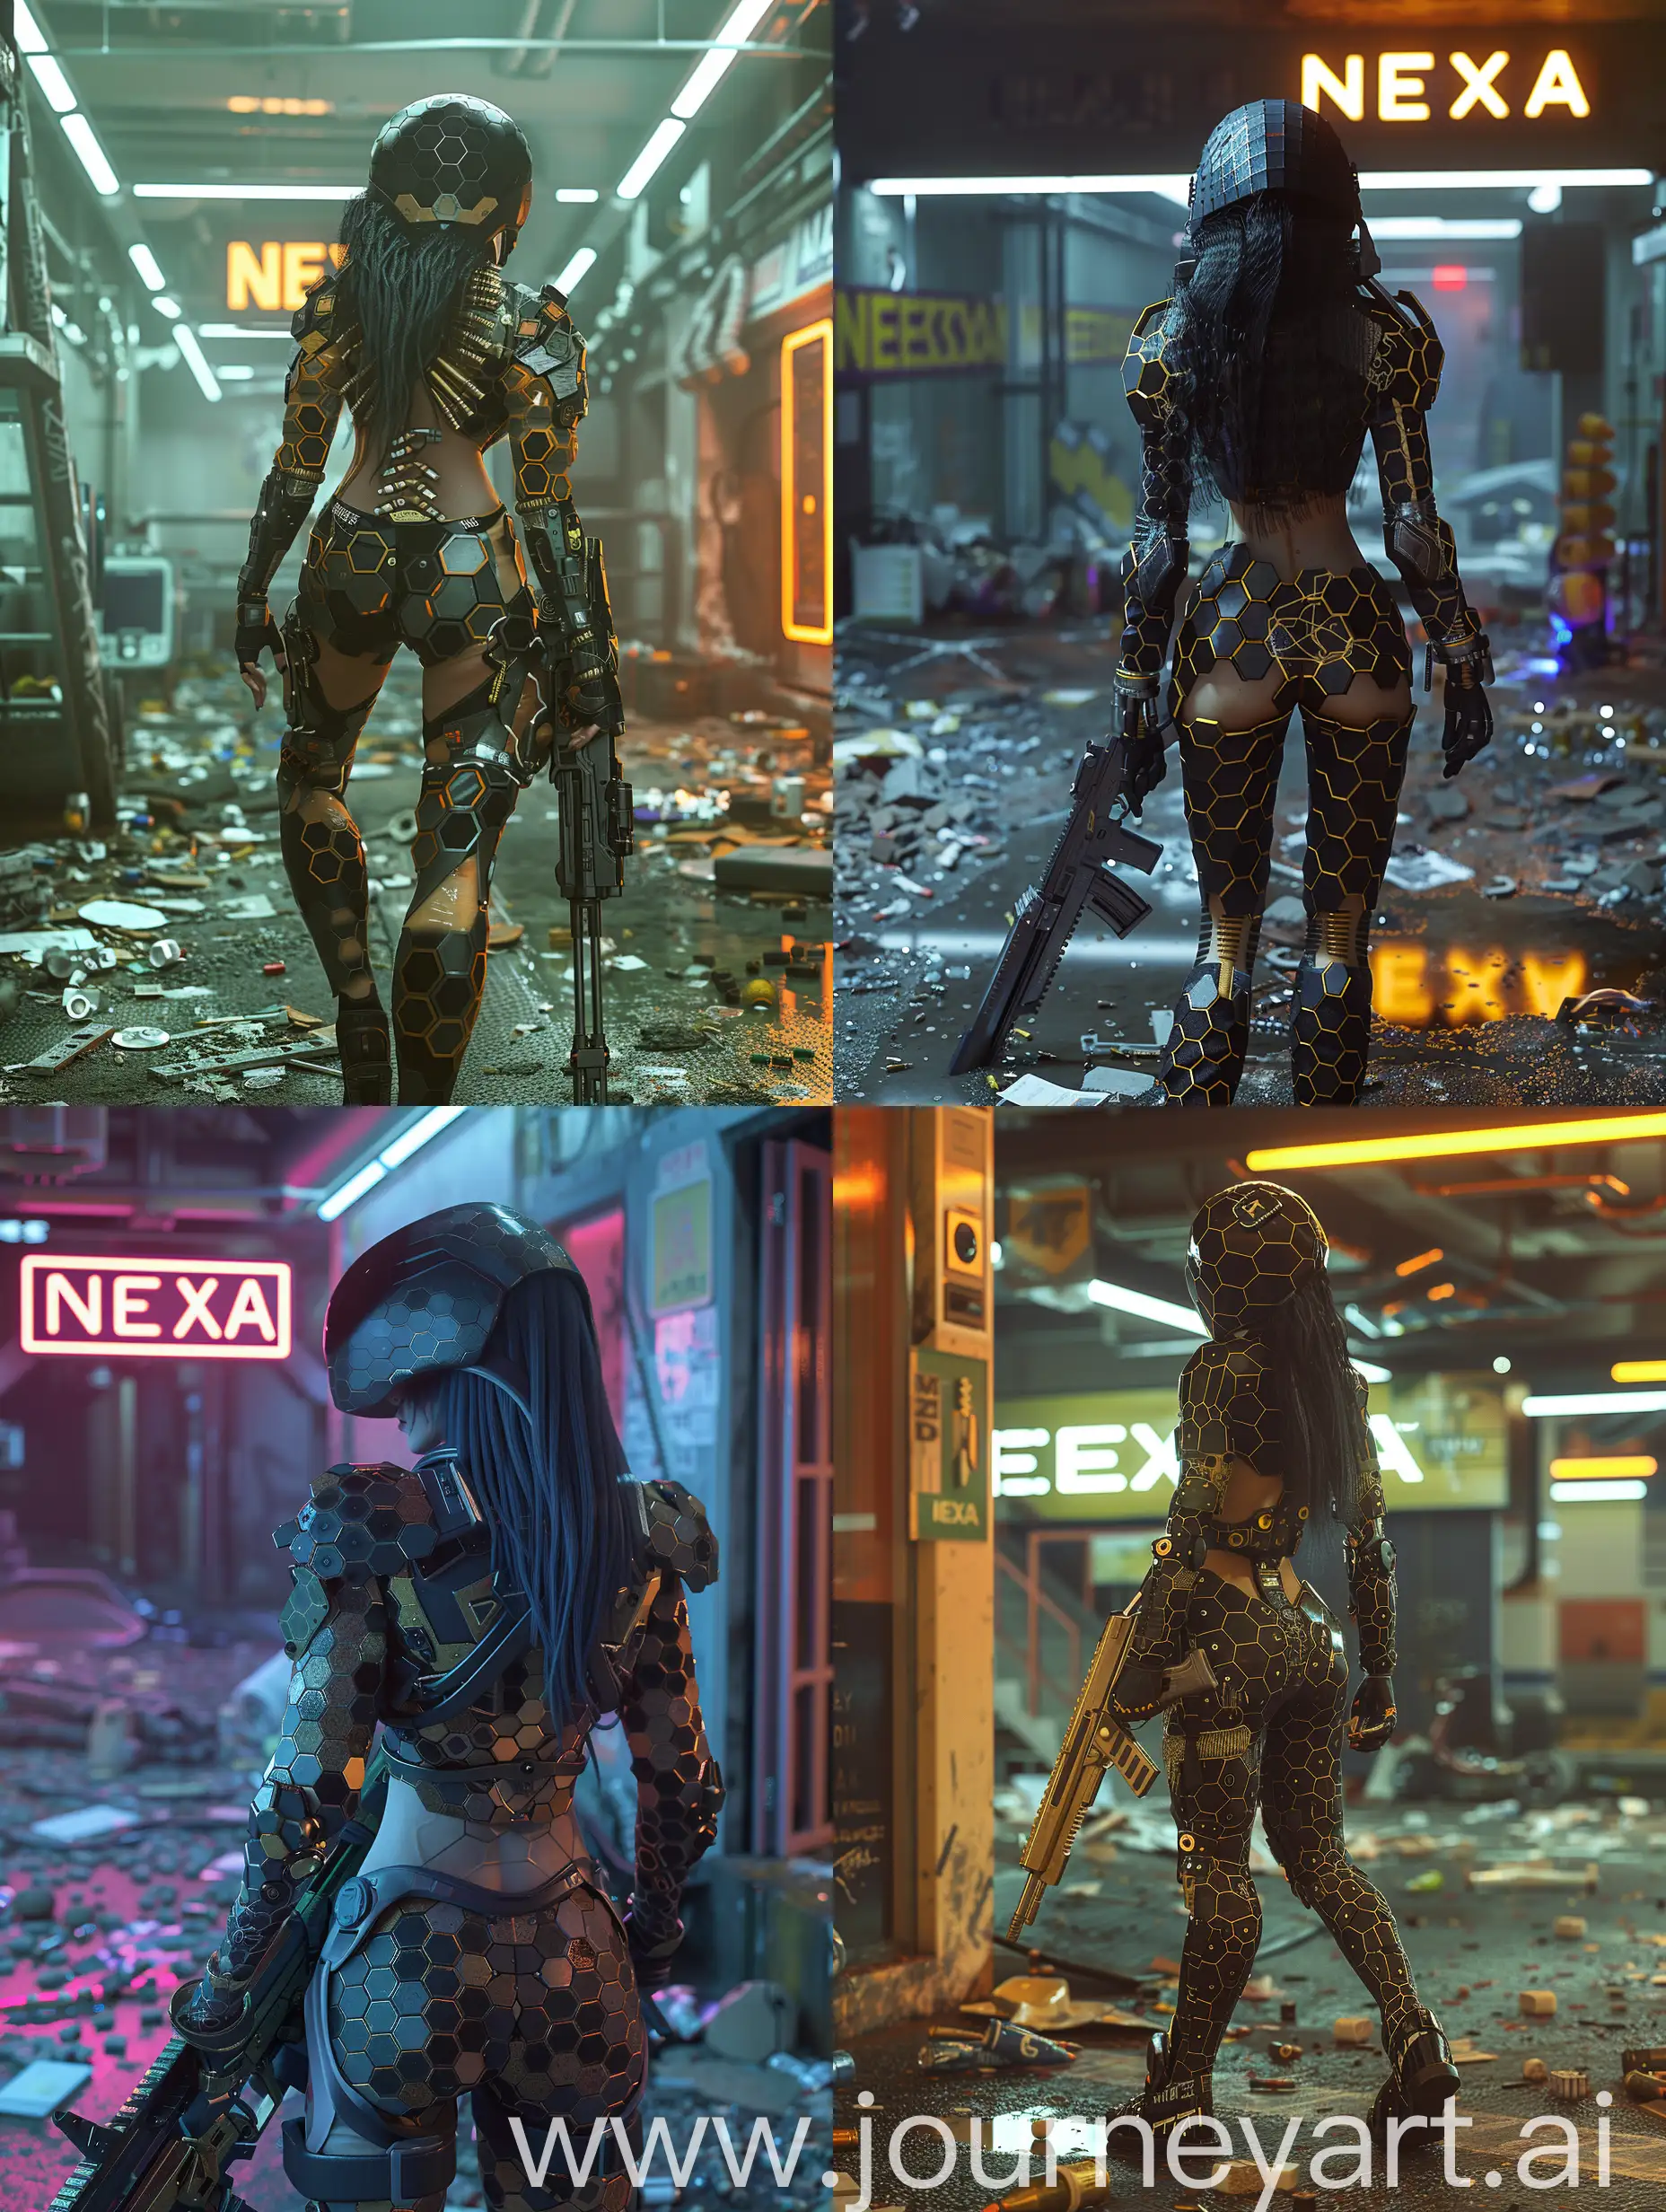 Futuristic-Cyberpunk-Warrior-in-NEXA-Compound